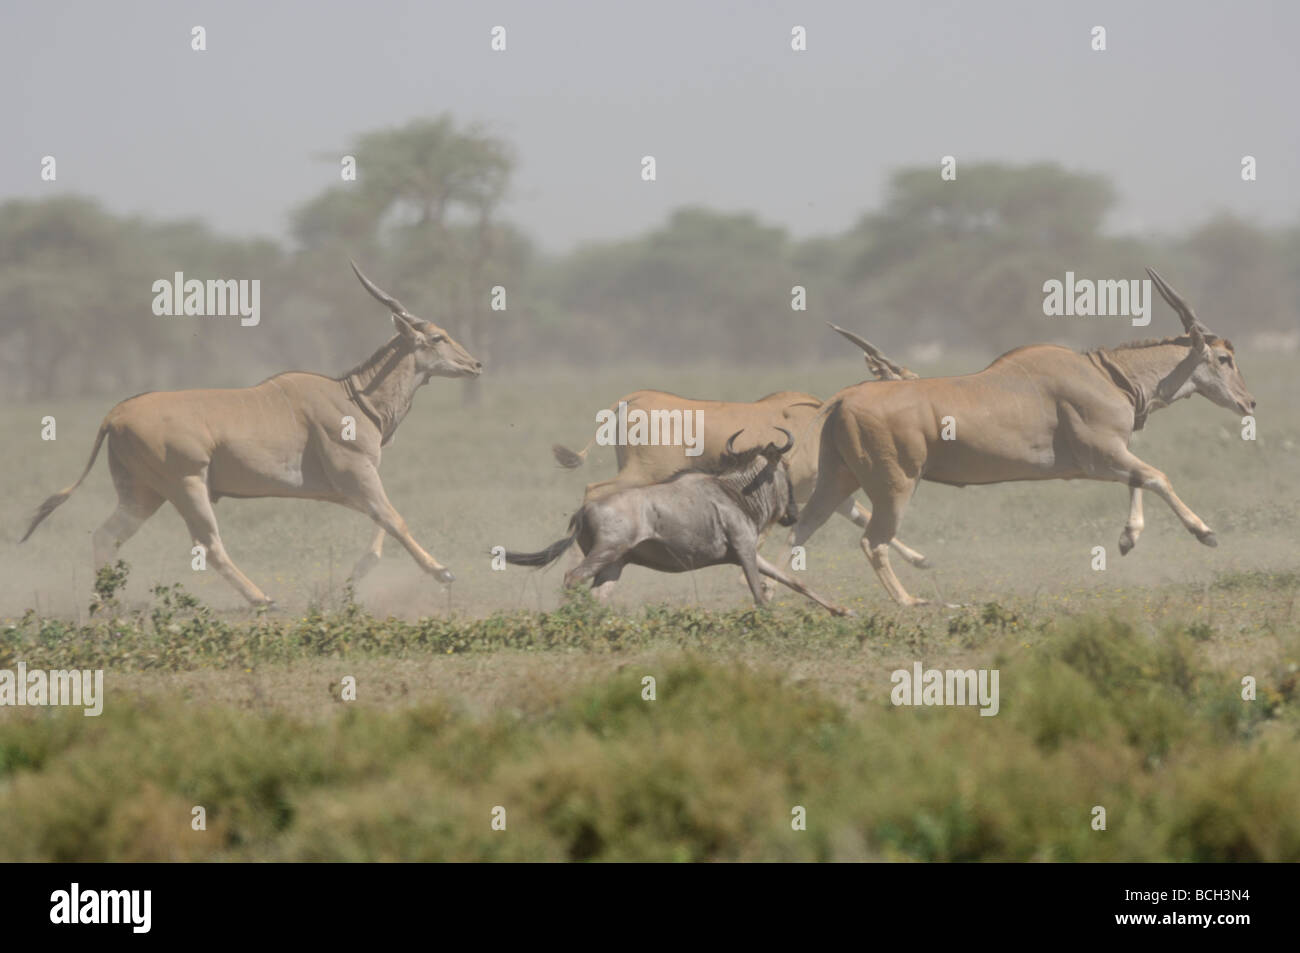 Stock photo of an eland and wildebeest stampede, Ndutu, Tanzania, February 2009. Stock Photo